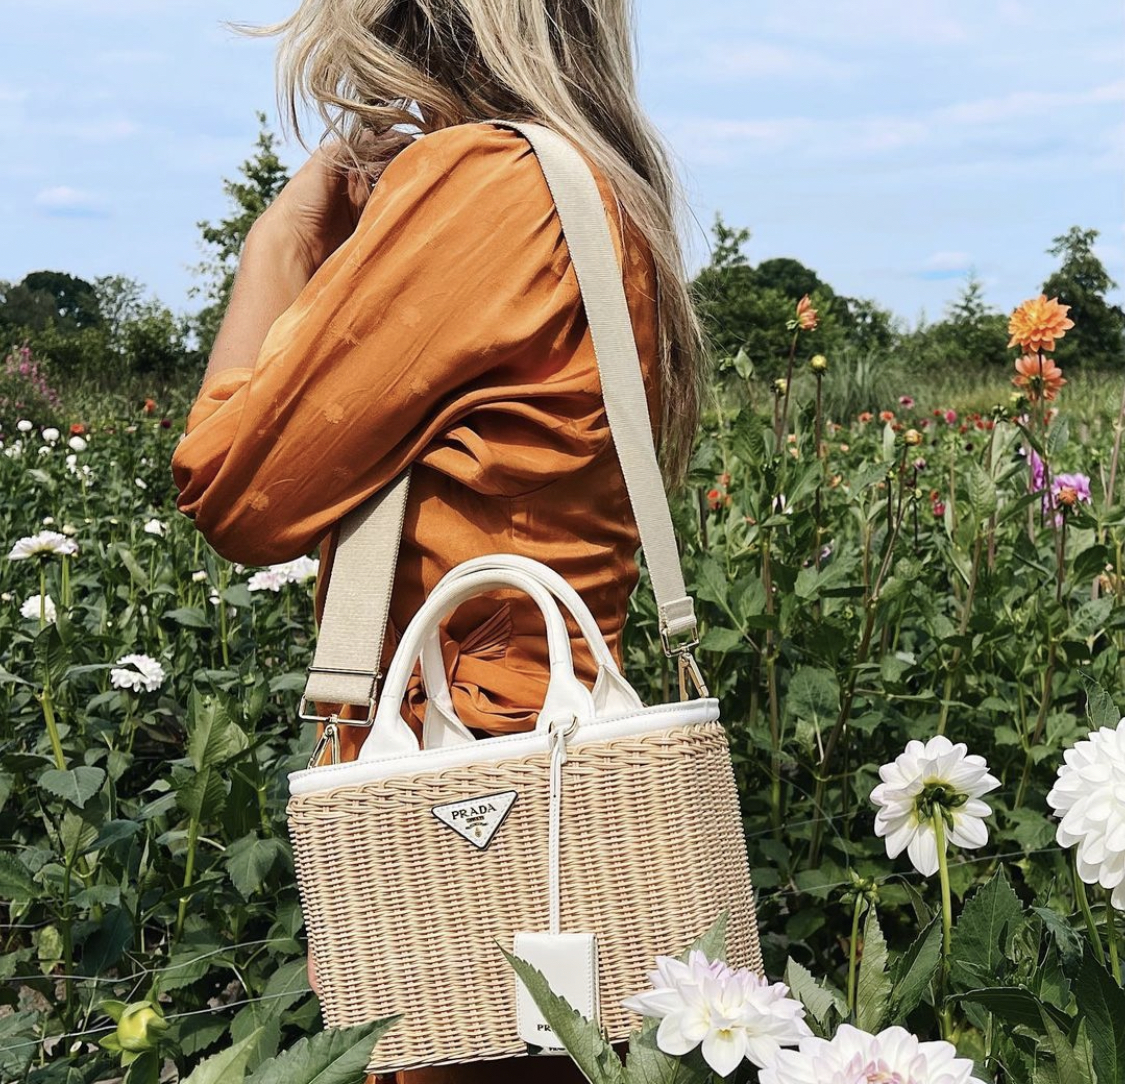 Luisa World - Chic summer style starts with a raffia bag. #celine